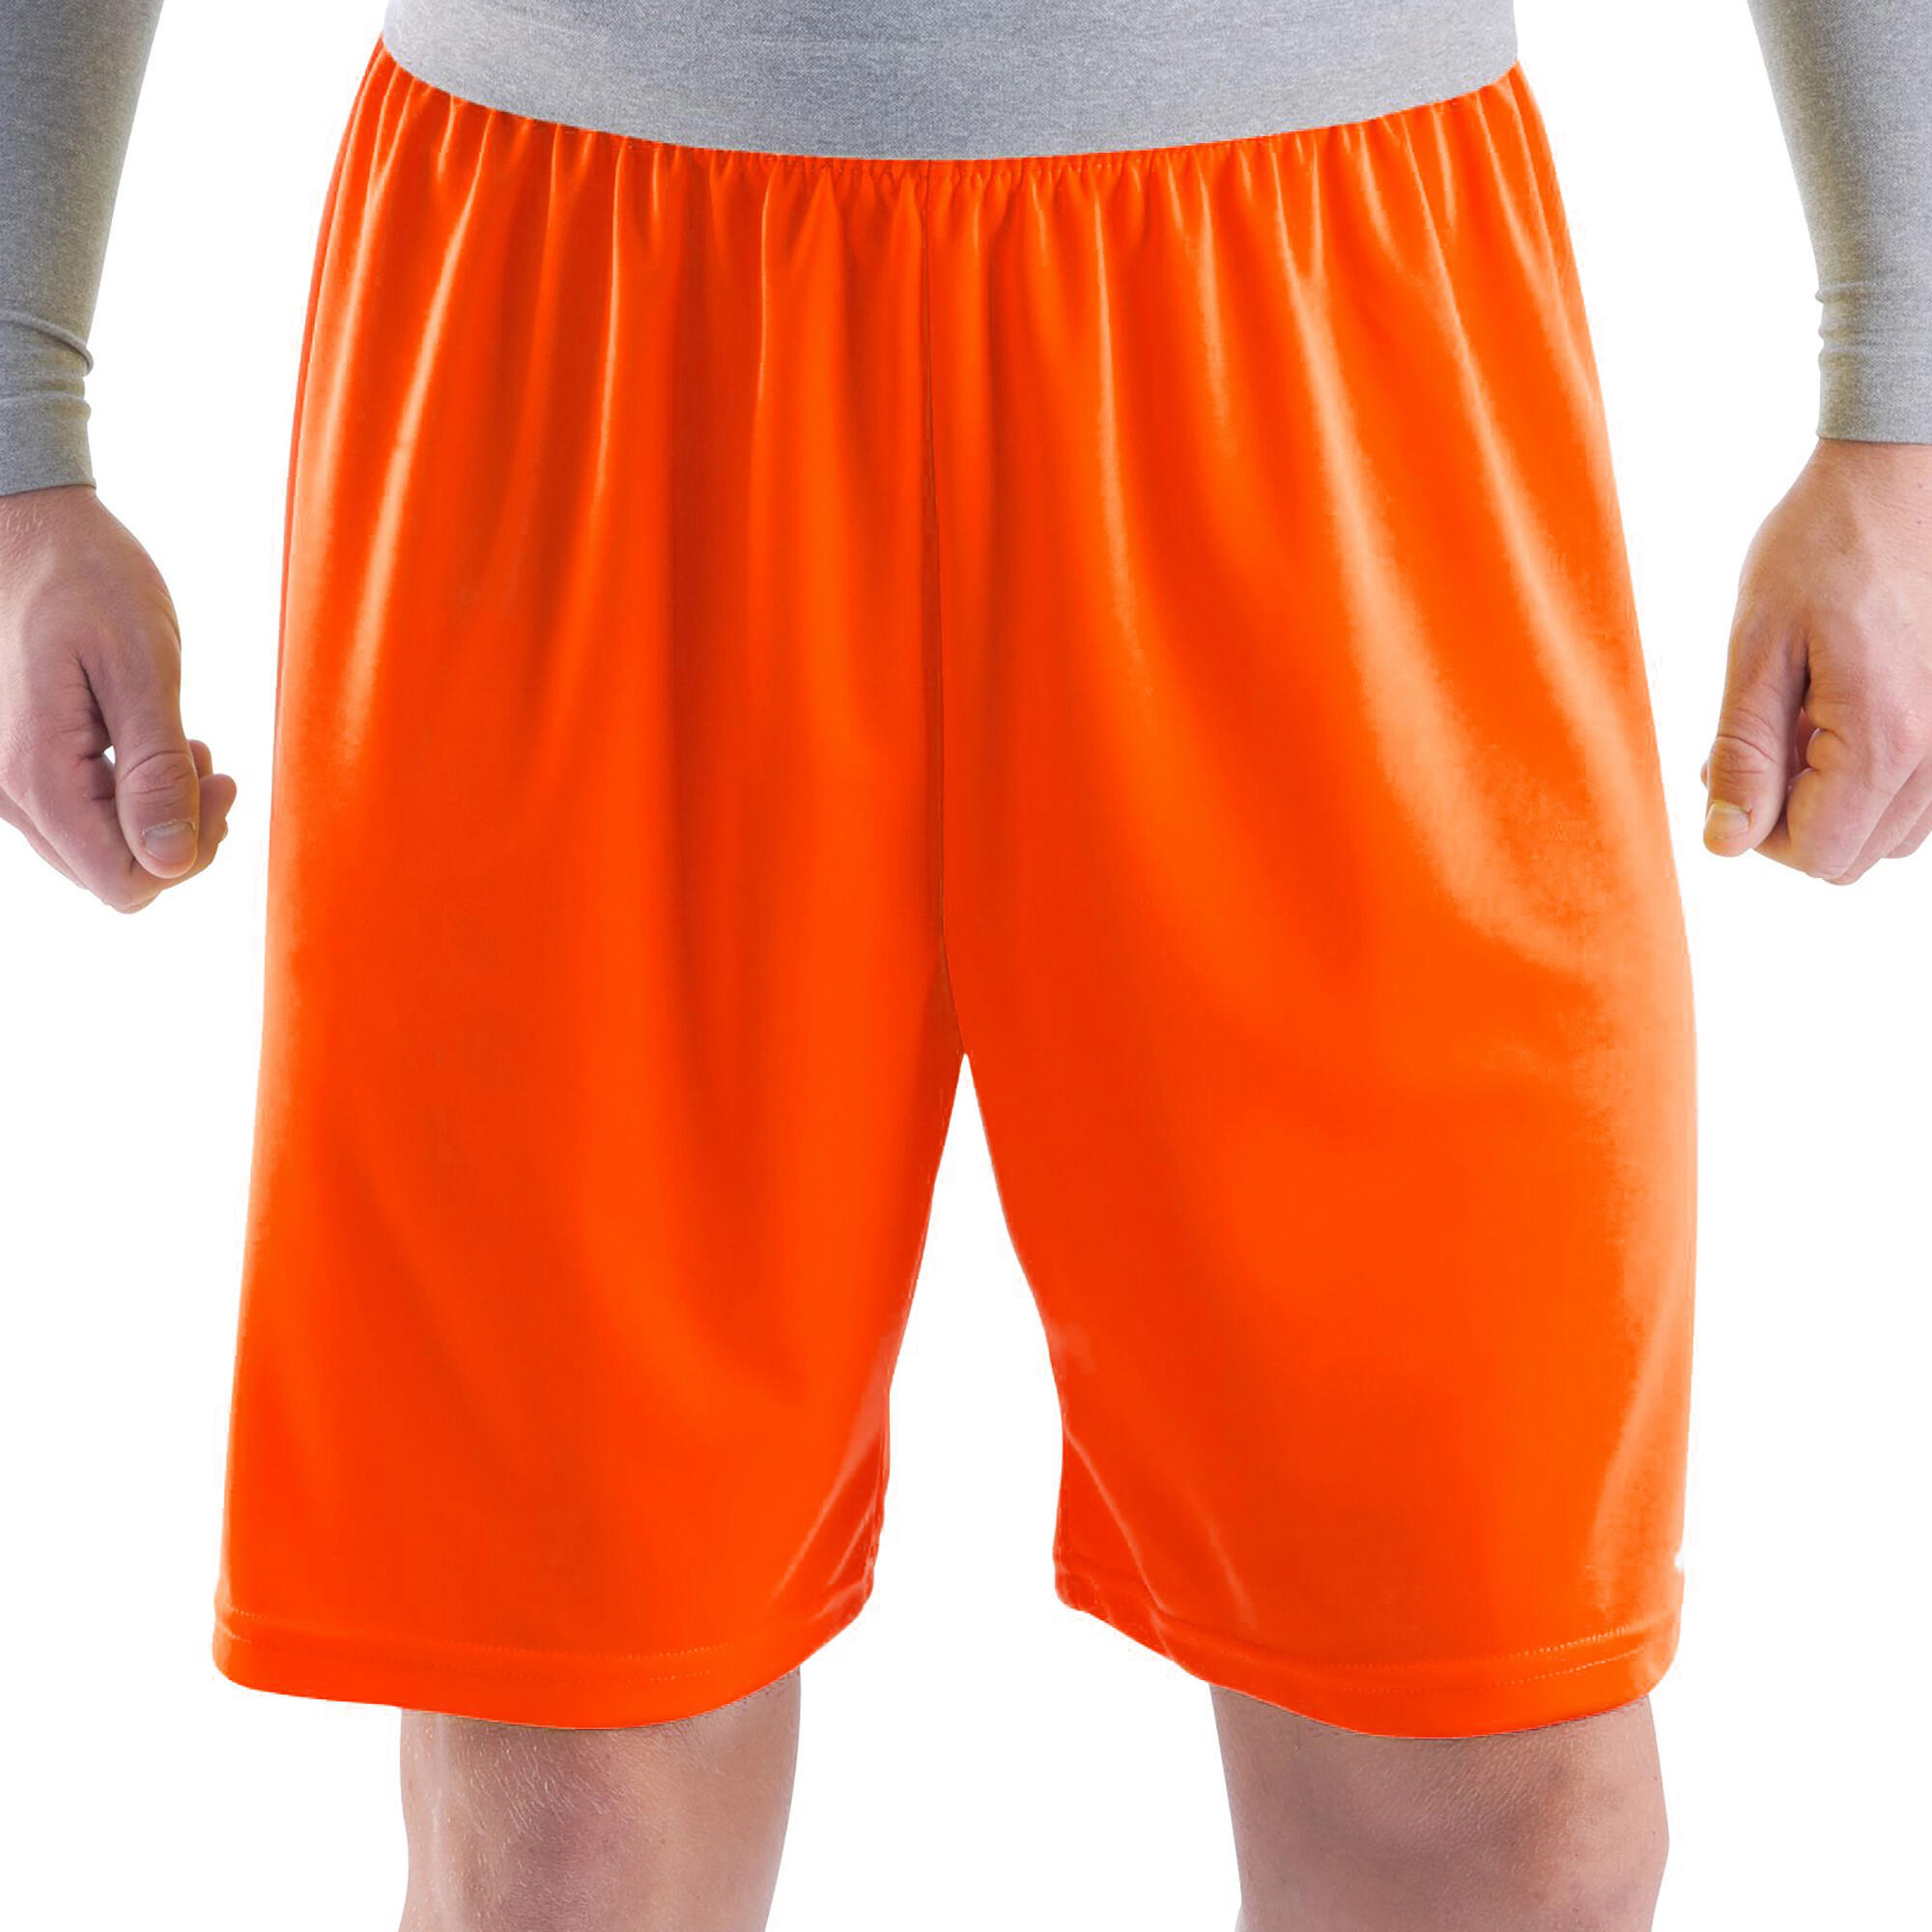 Damen/Herren Fussball Shorts - Essentiel orange